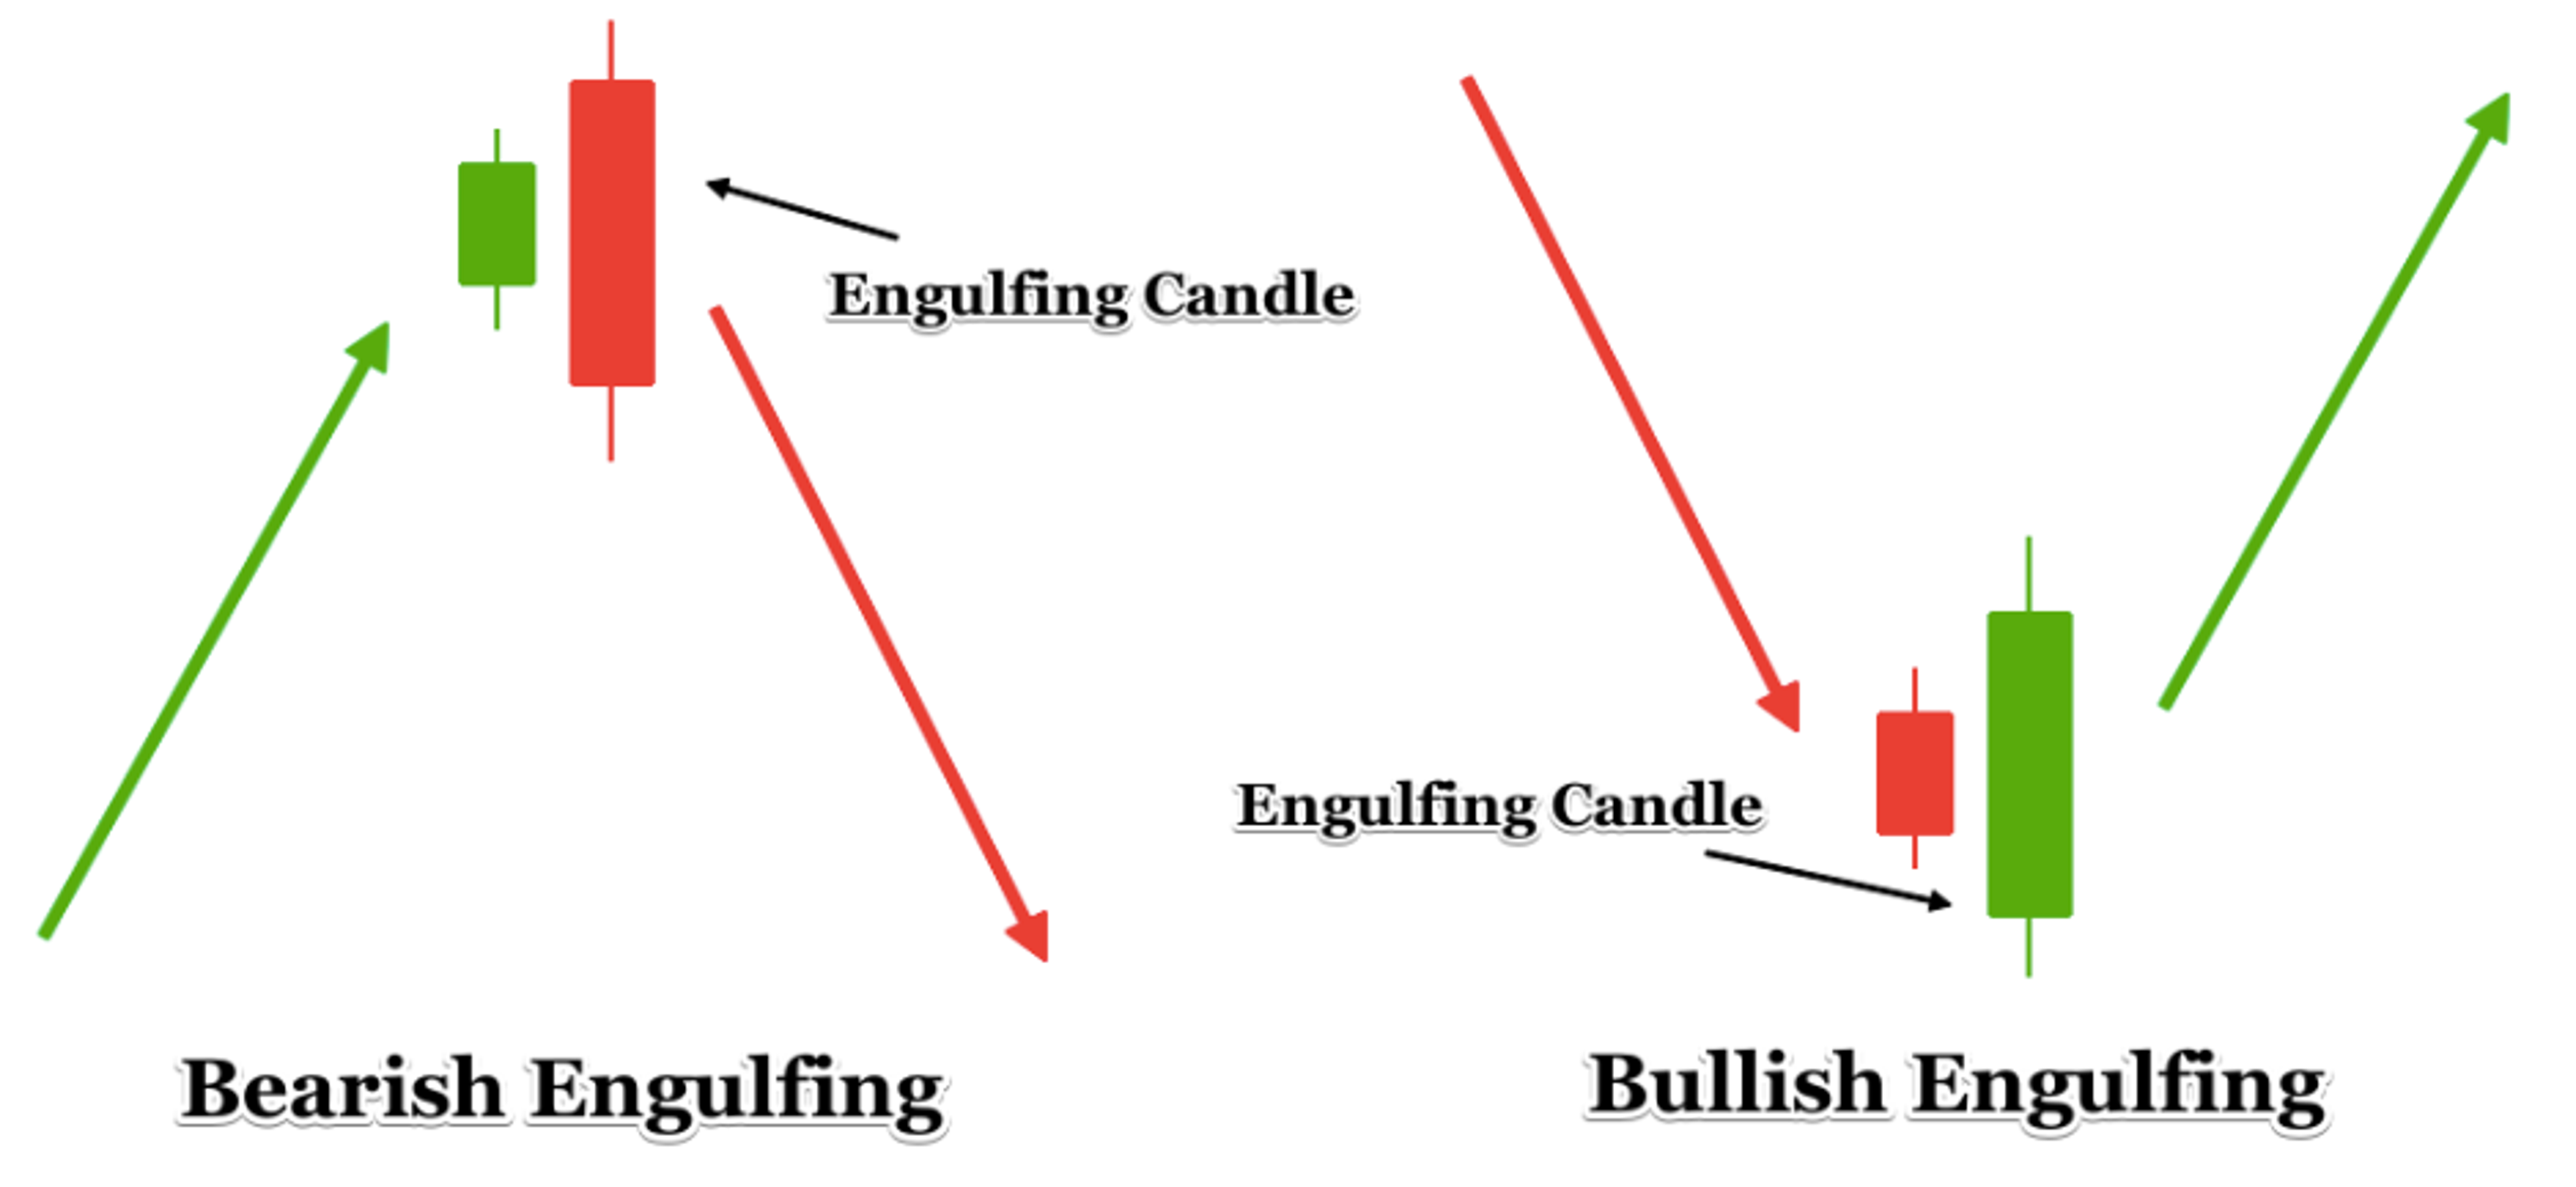 Bearish engulfing vs bullish engulfing candlesticks